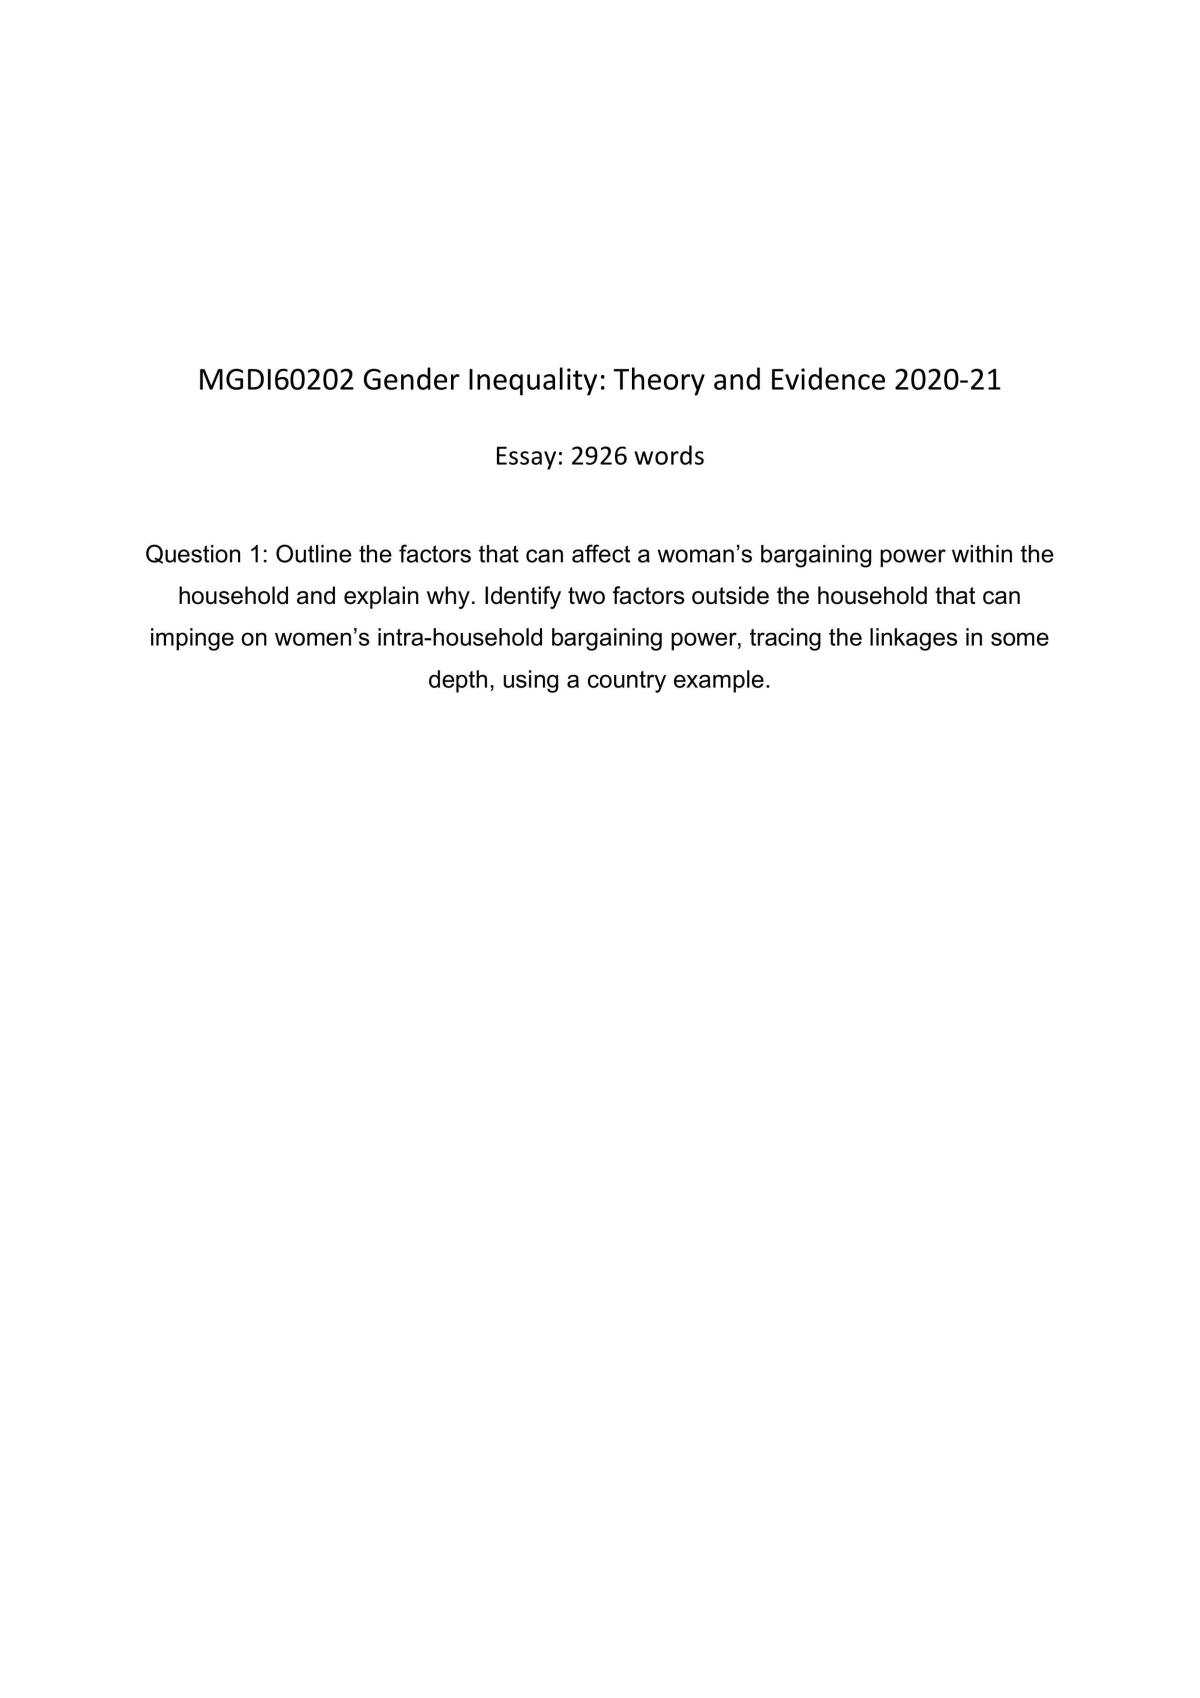 gender inequality essay free